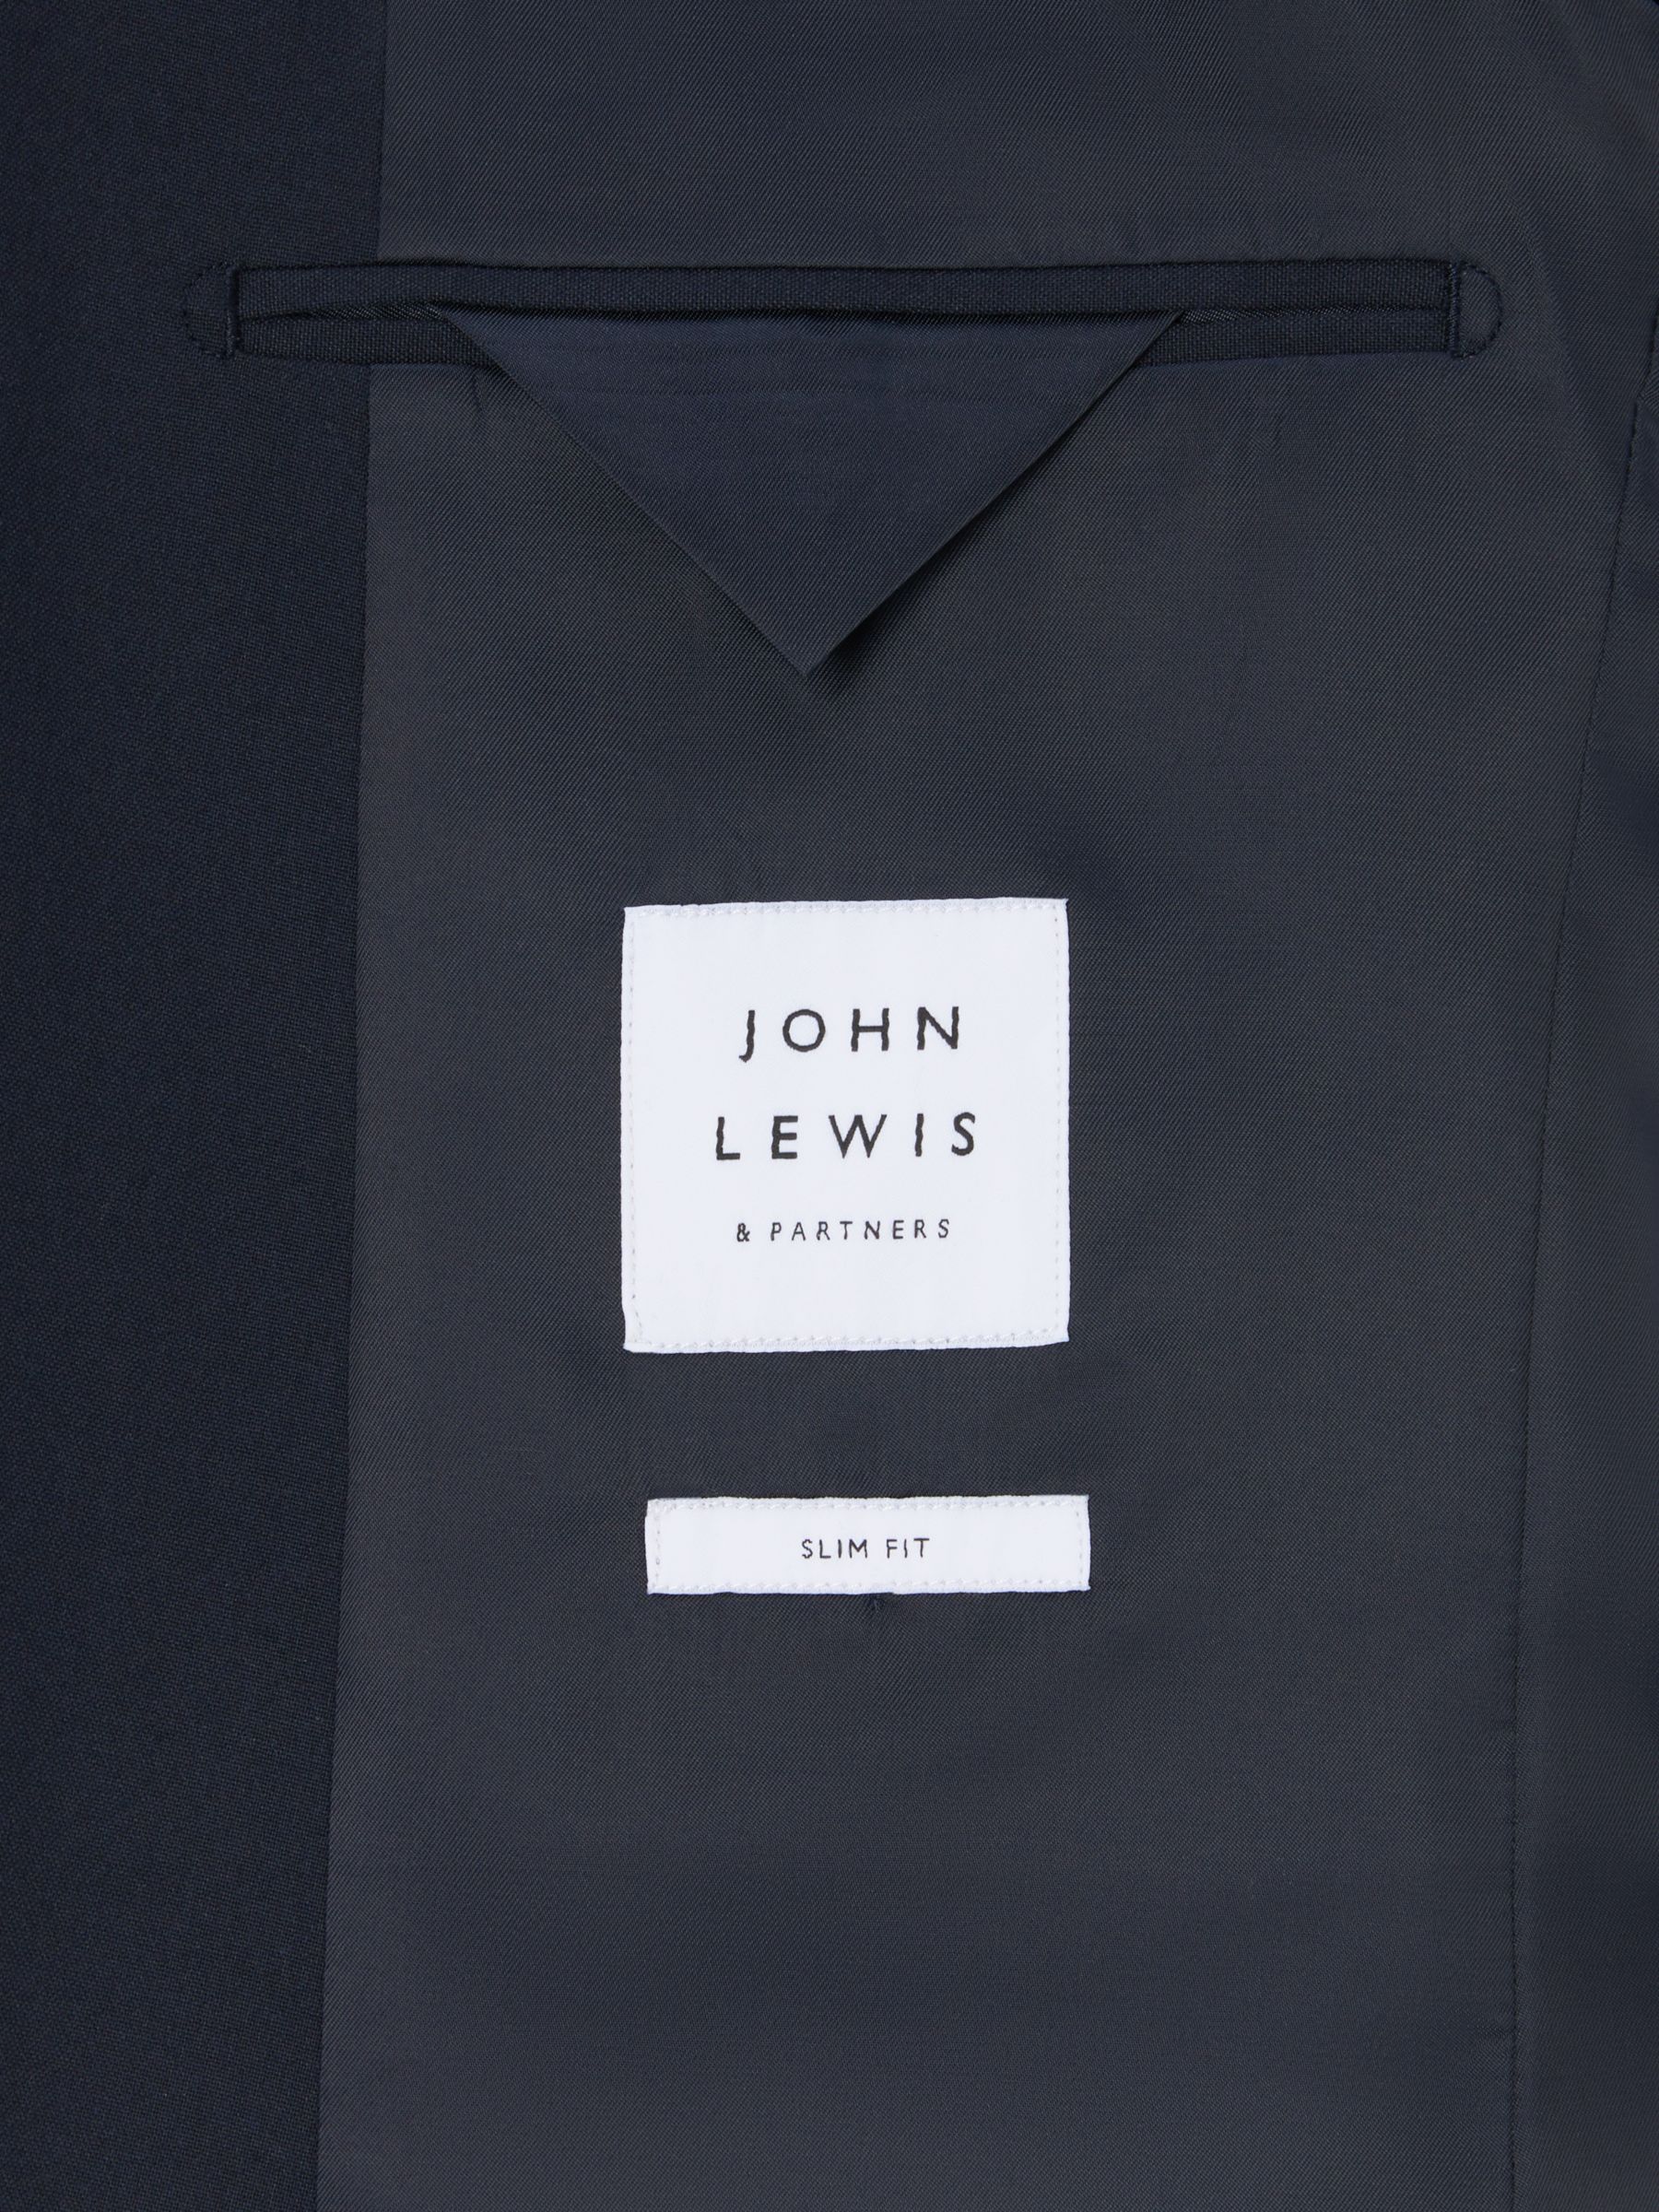 John Lewis Slim Fit Starter Suit Jacket, Navy, 36R